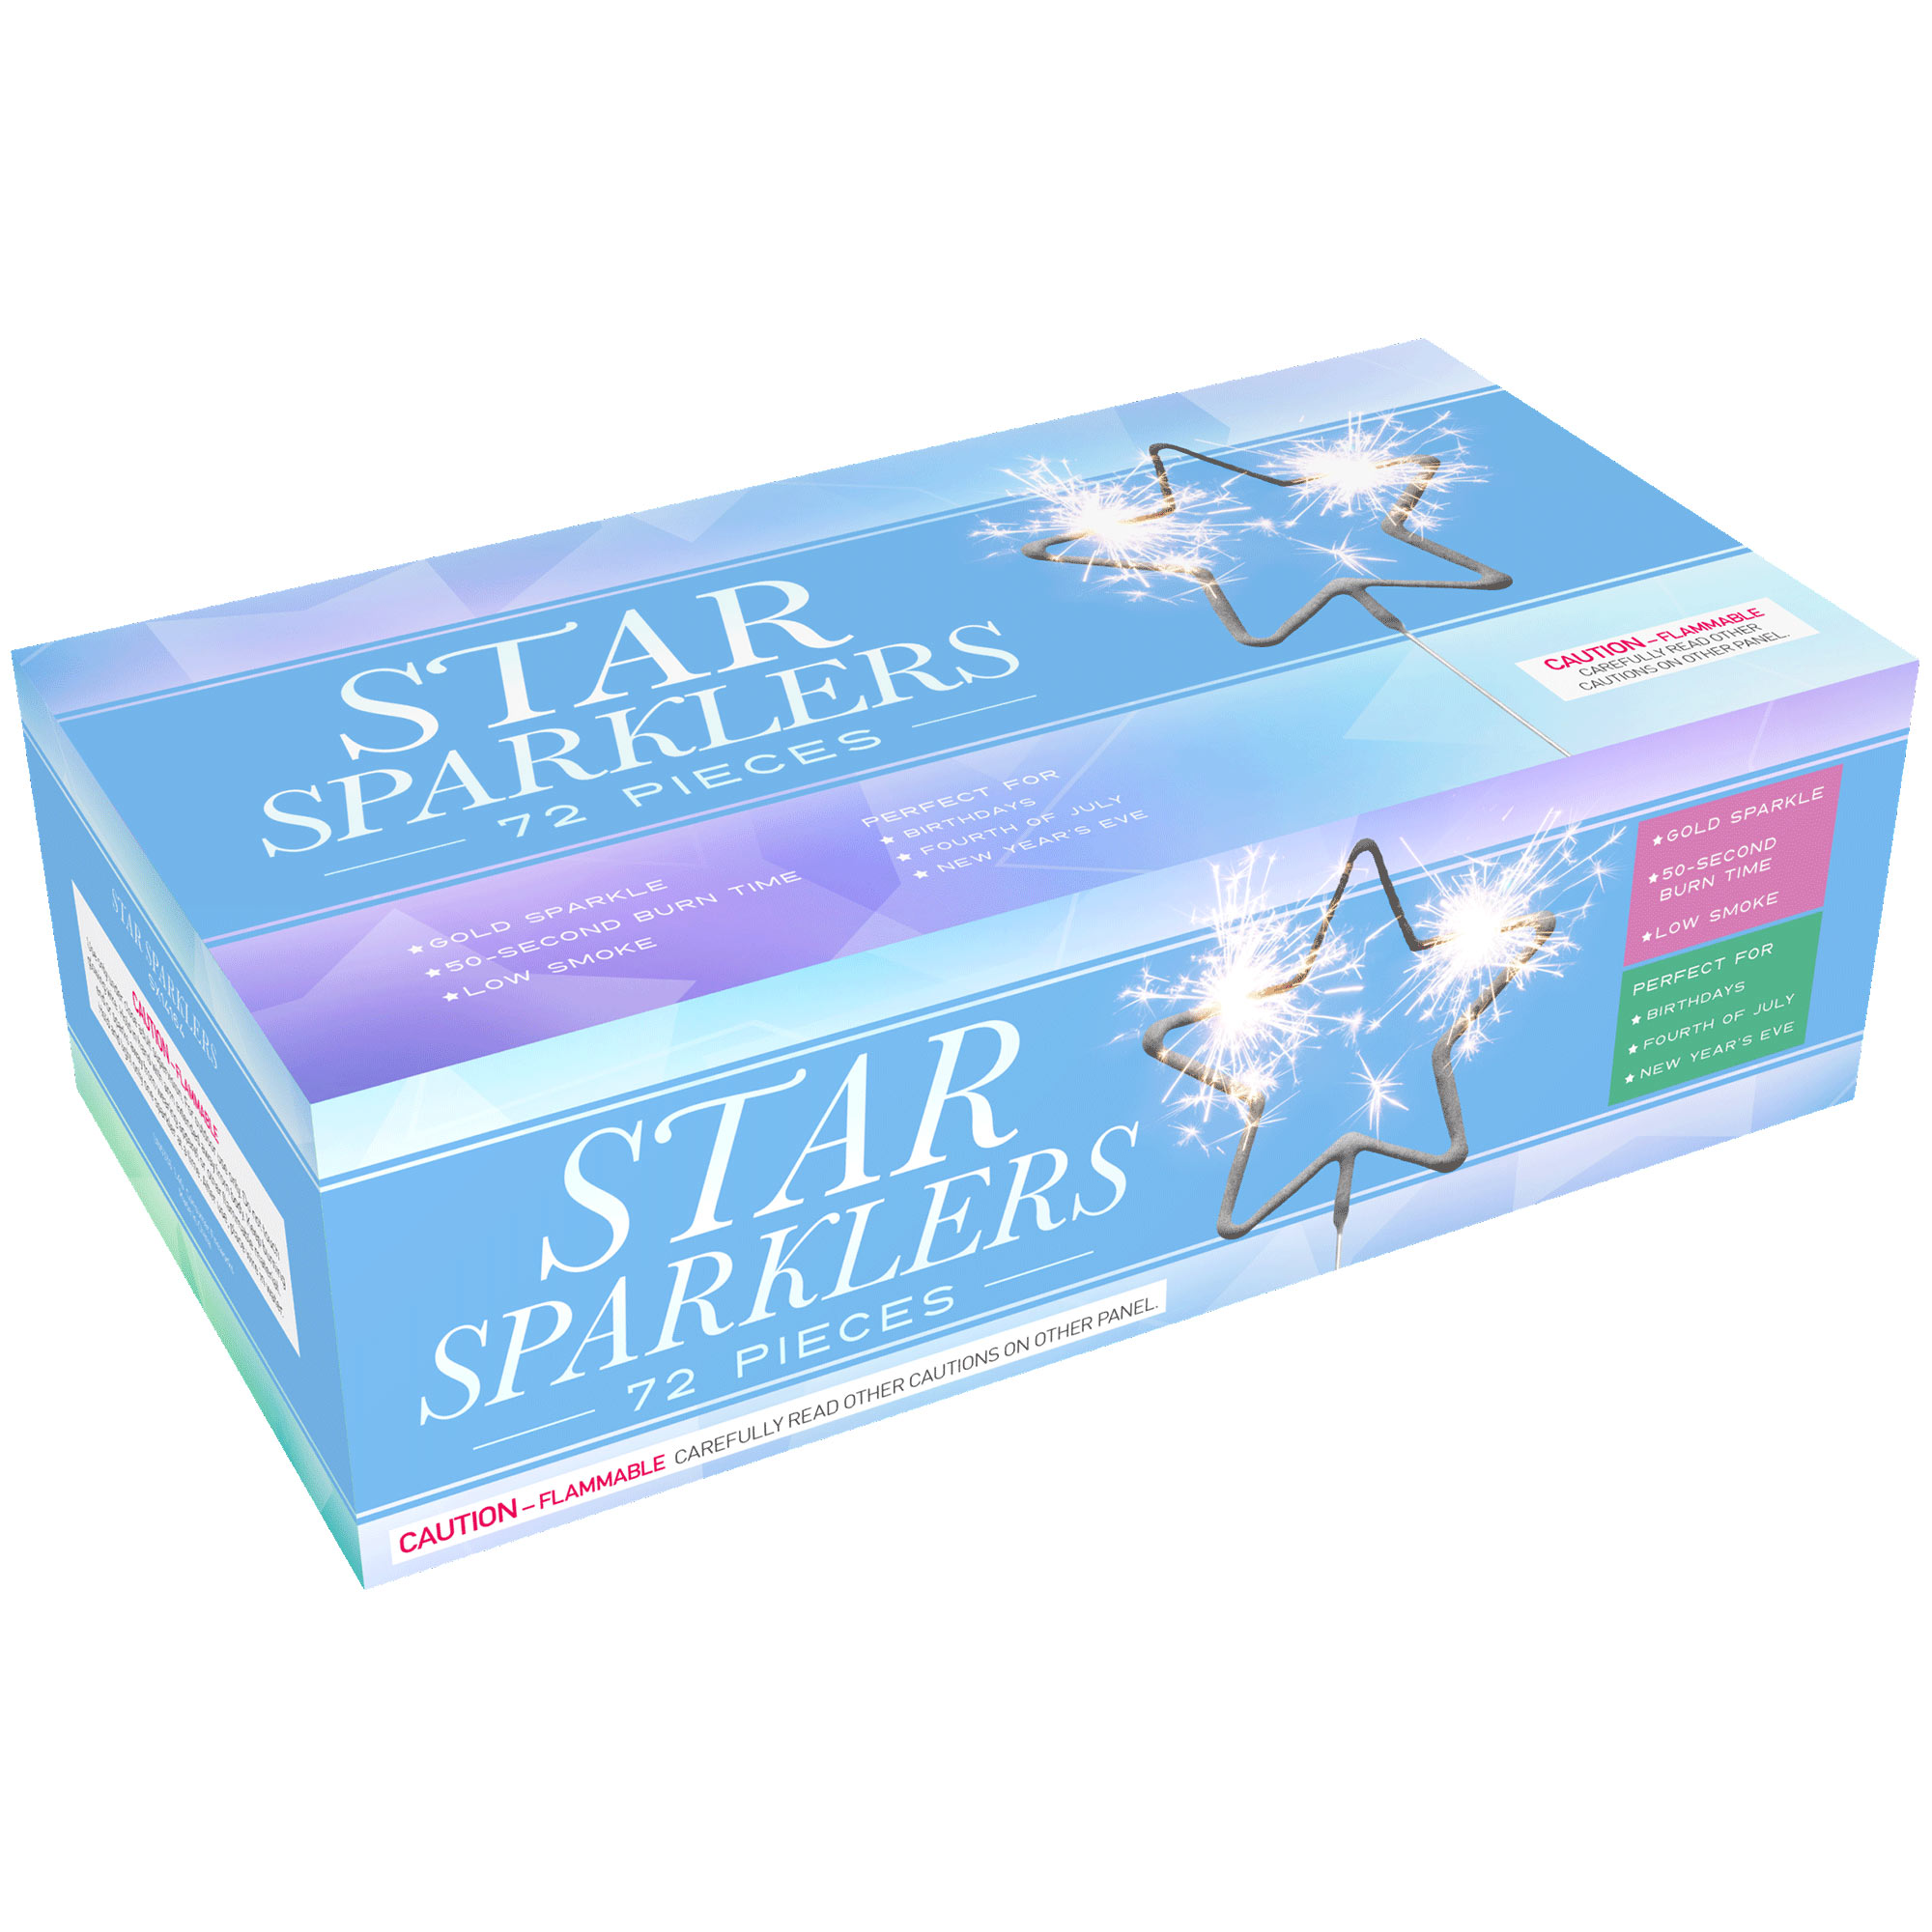 SFX Star Sparklers